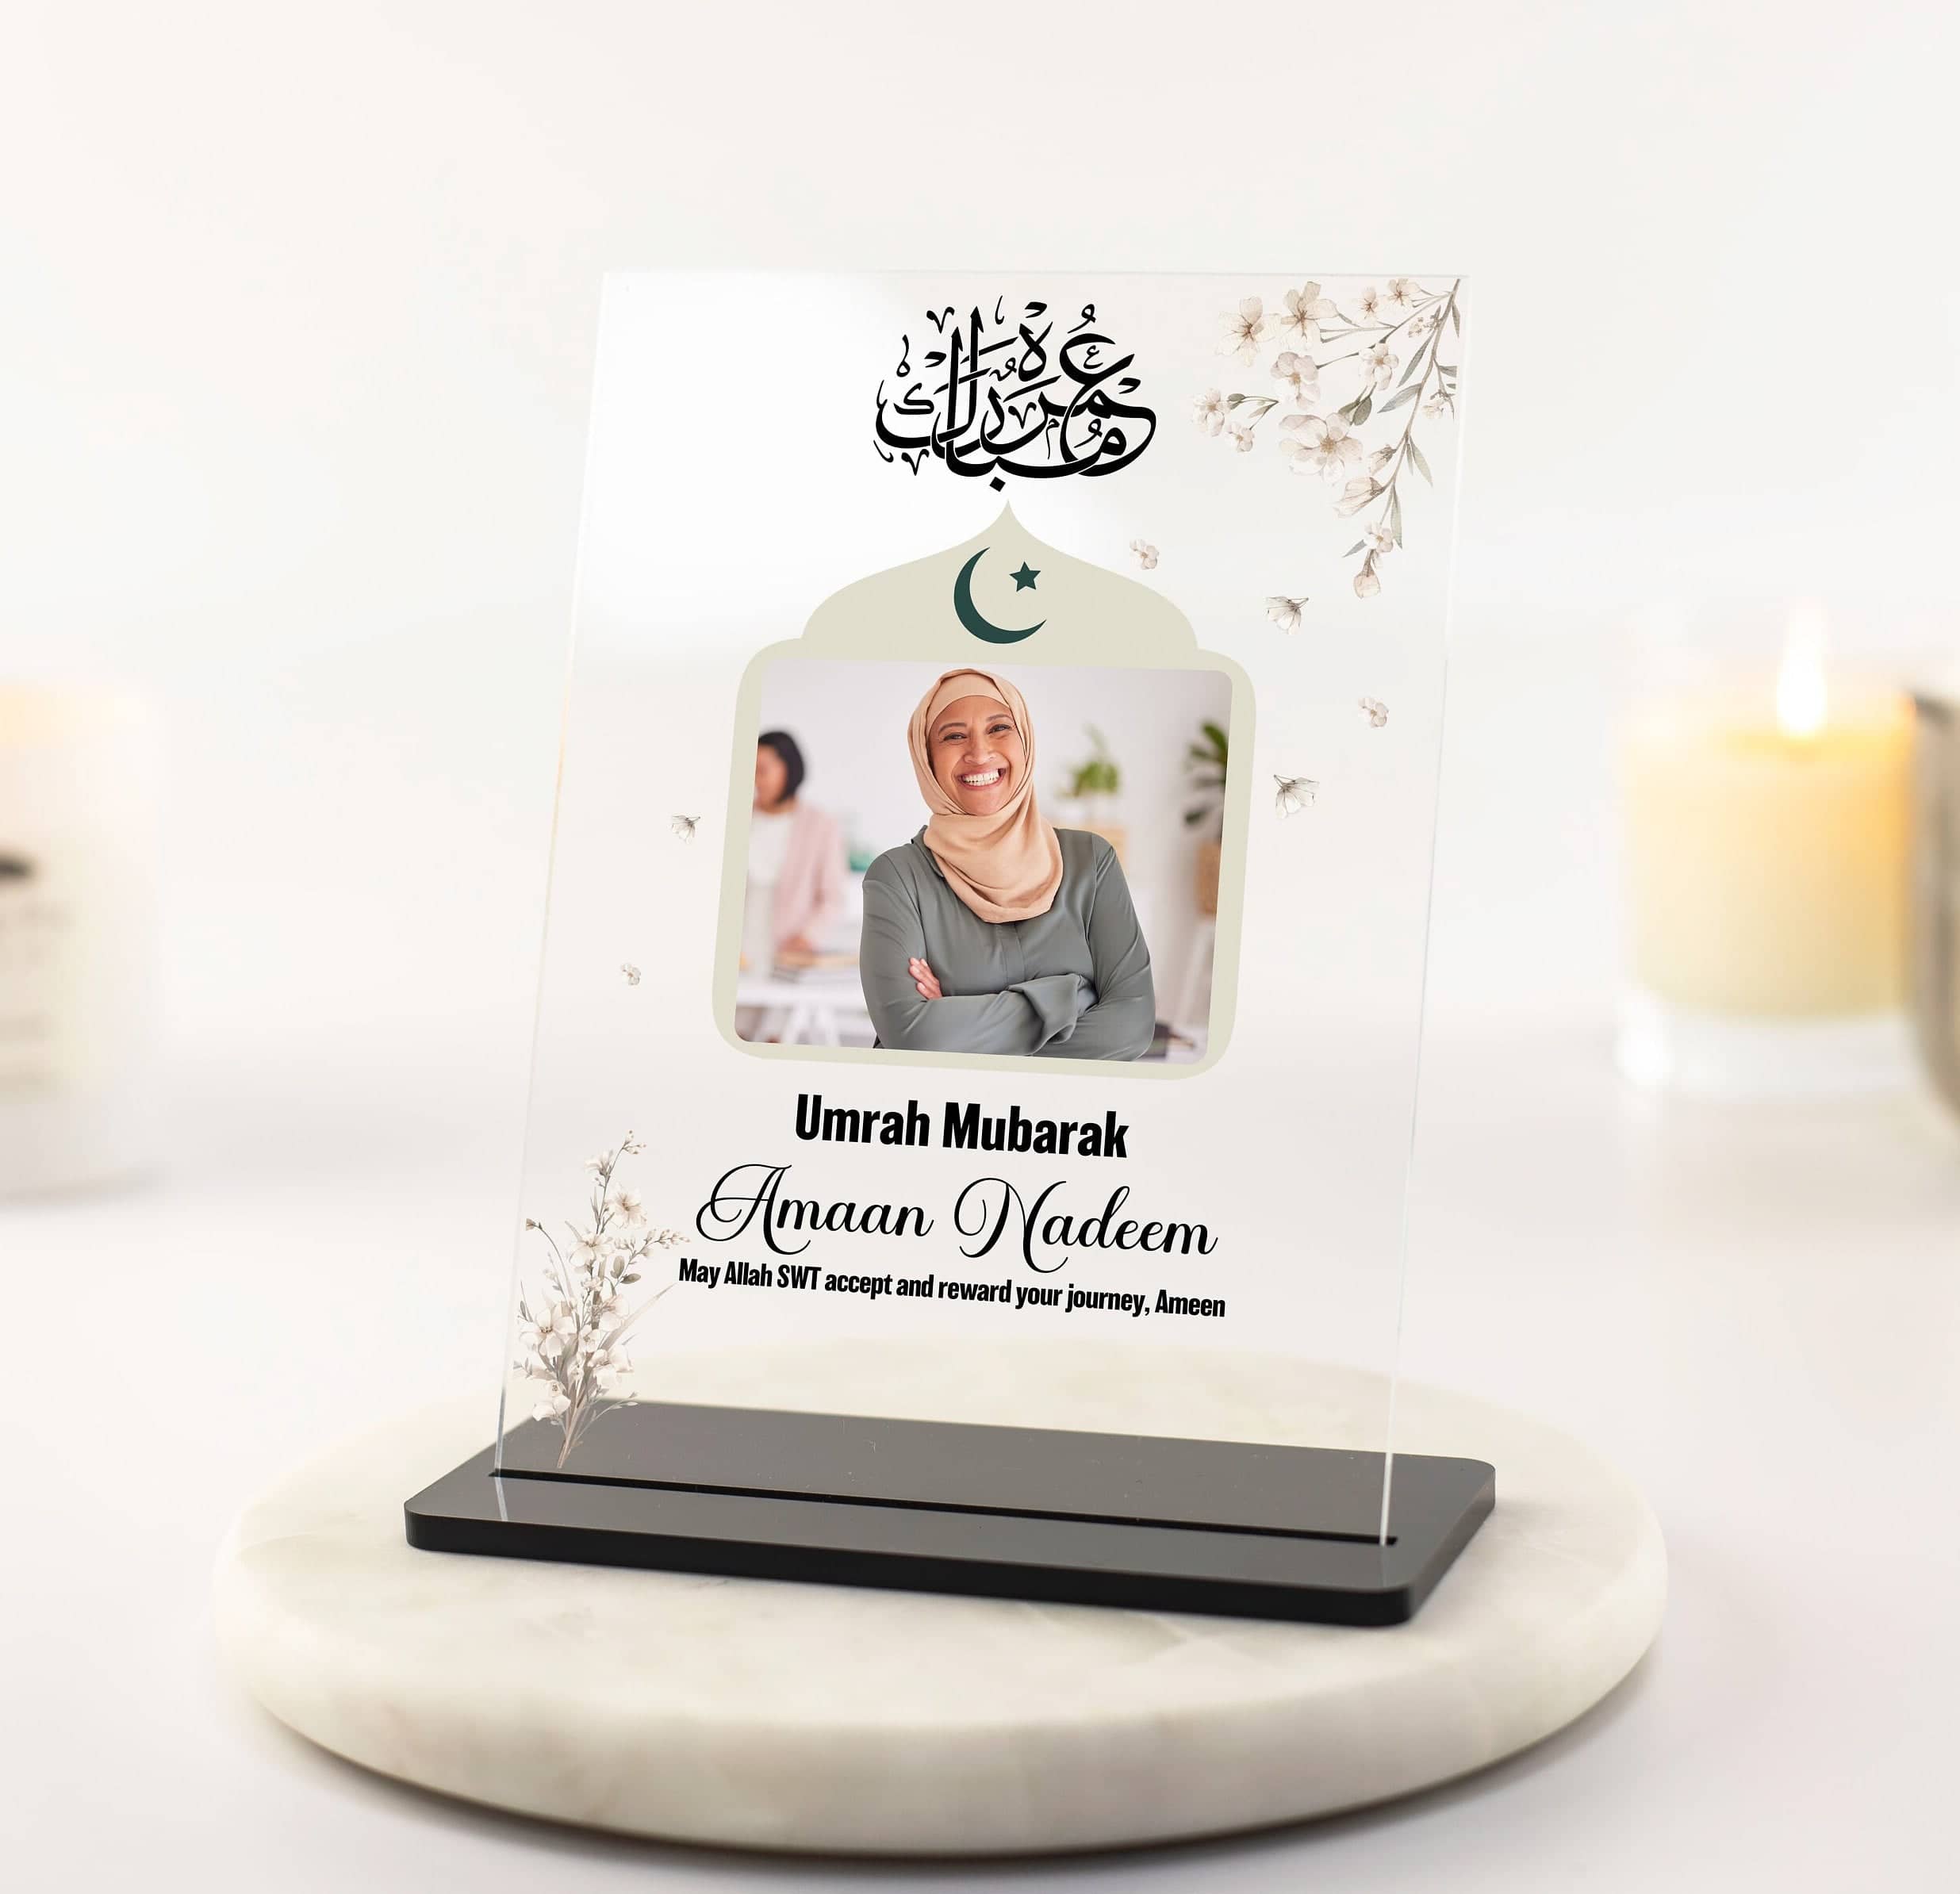 Umrah mubarak gift with photo and kaaba illustration print Photo gifts, ramadan gift eid mubarak